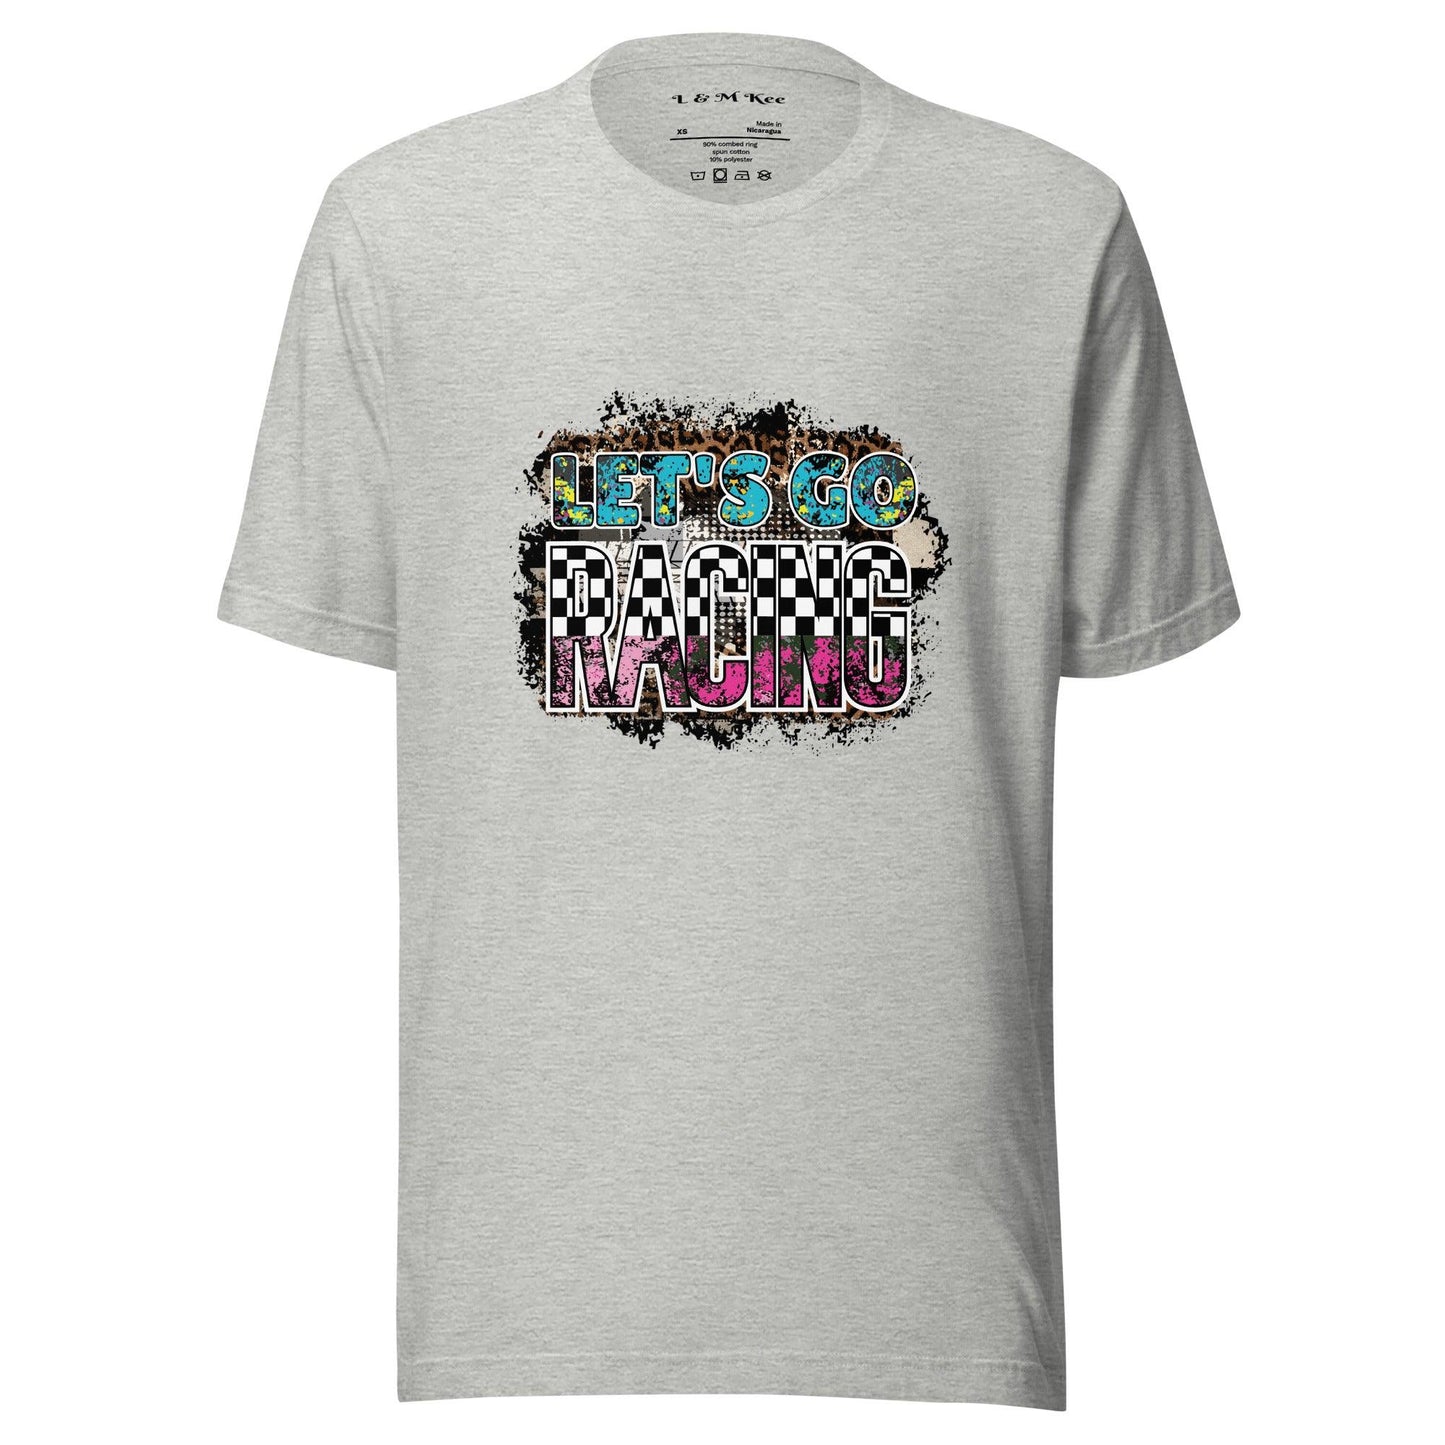 Let's Go Racing Unisex T-shirt - L & M Kee, LLC